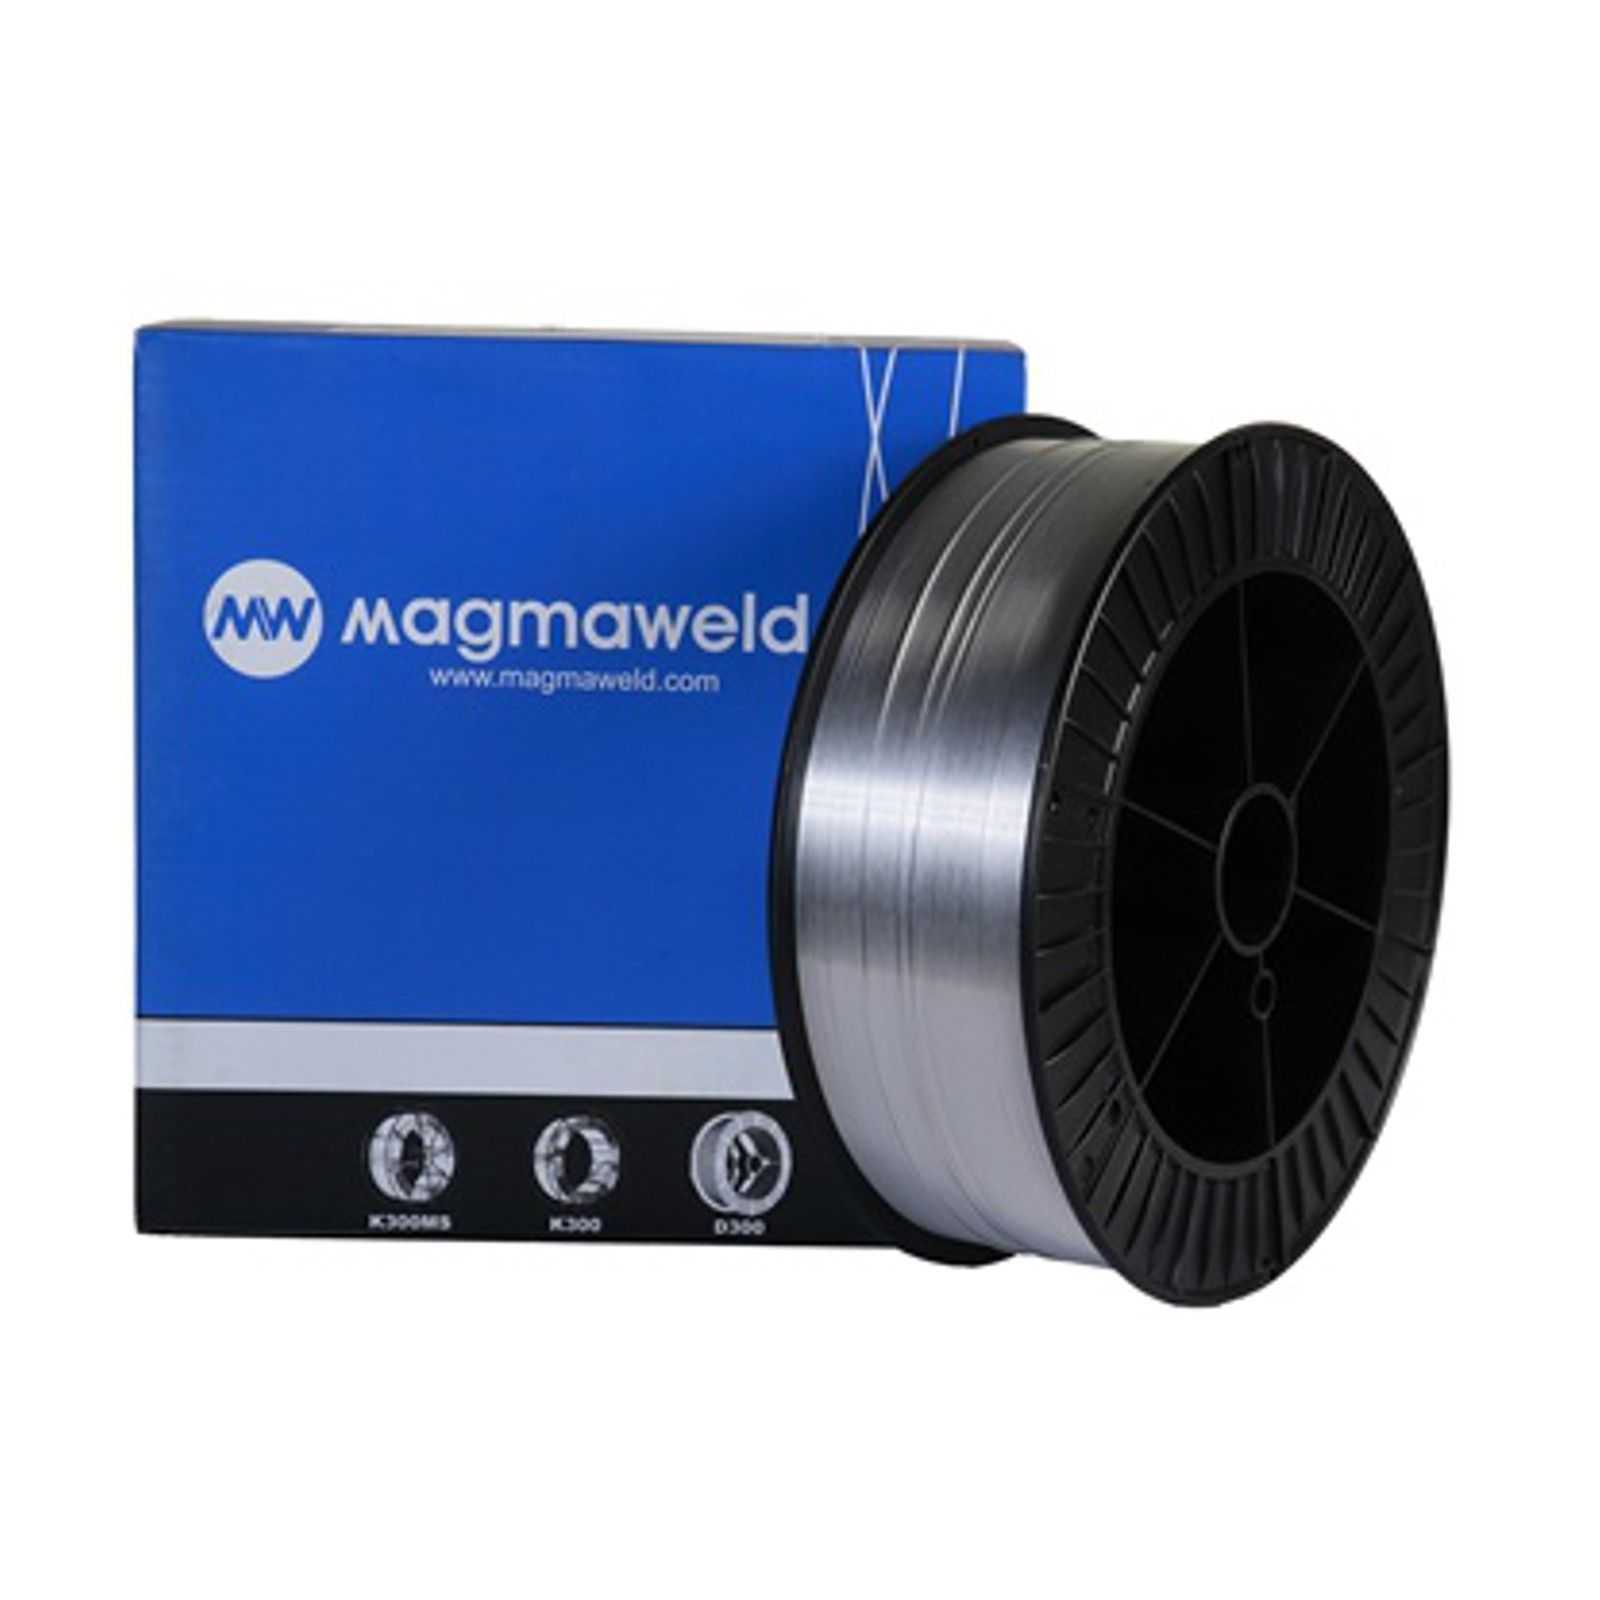 MAGMAWELD AWS 4043 AlSi 5 (3.2245) MIG Schweißdraht Aluminium Ø 1,0mm - 2,0 kg (D200 Spule) - 0040431002 -  -  - 47,53 € - 